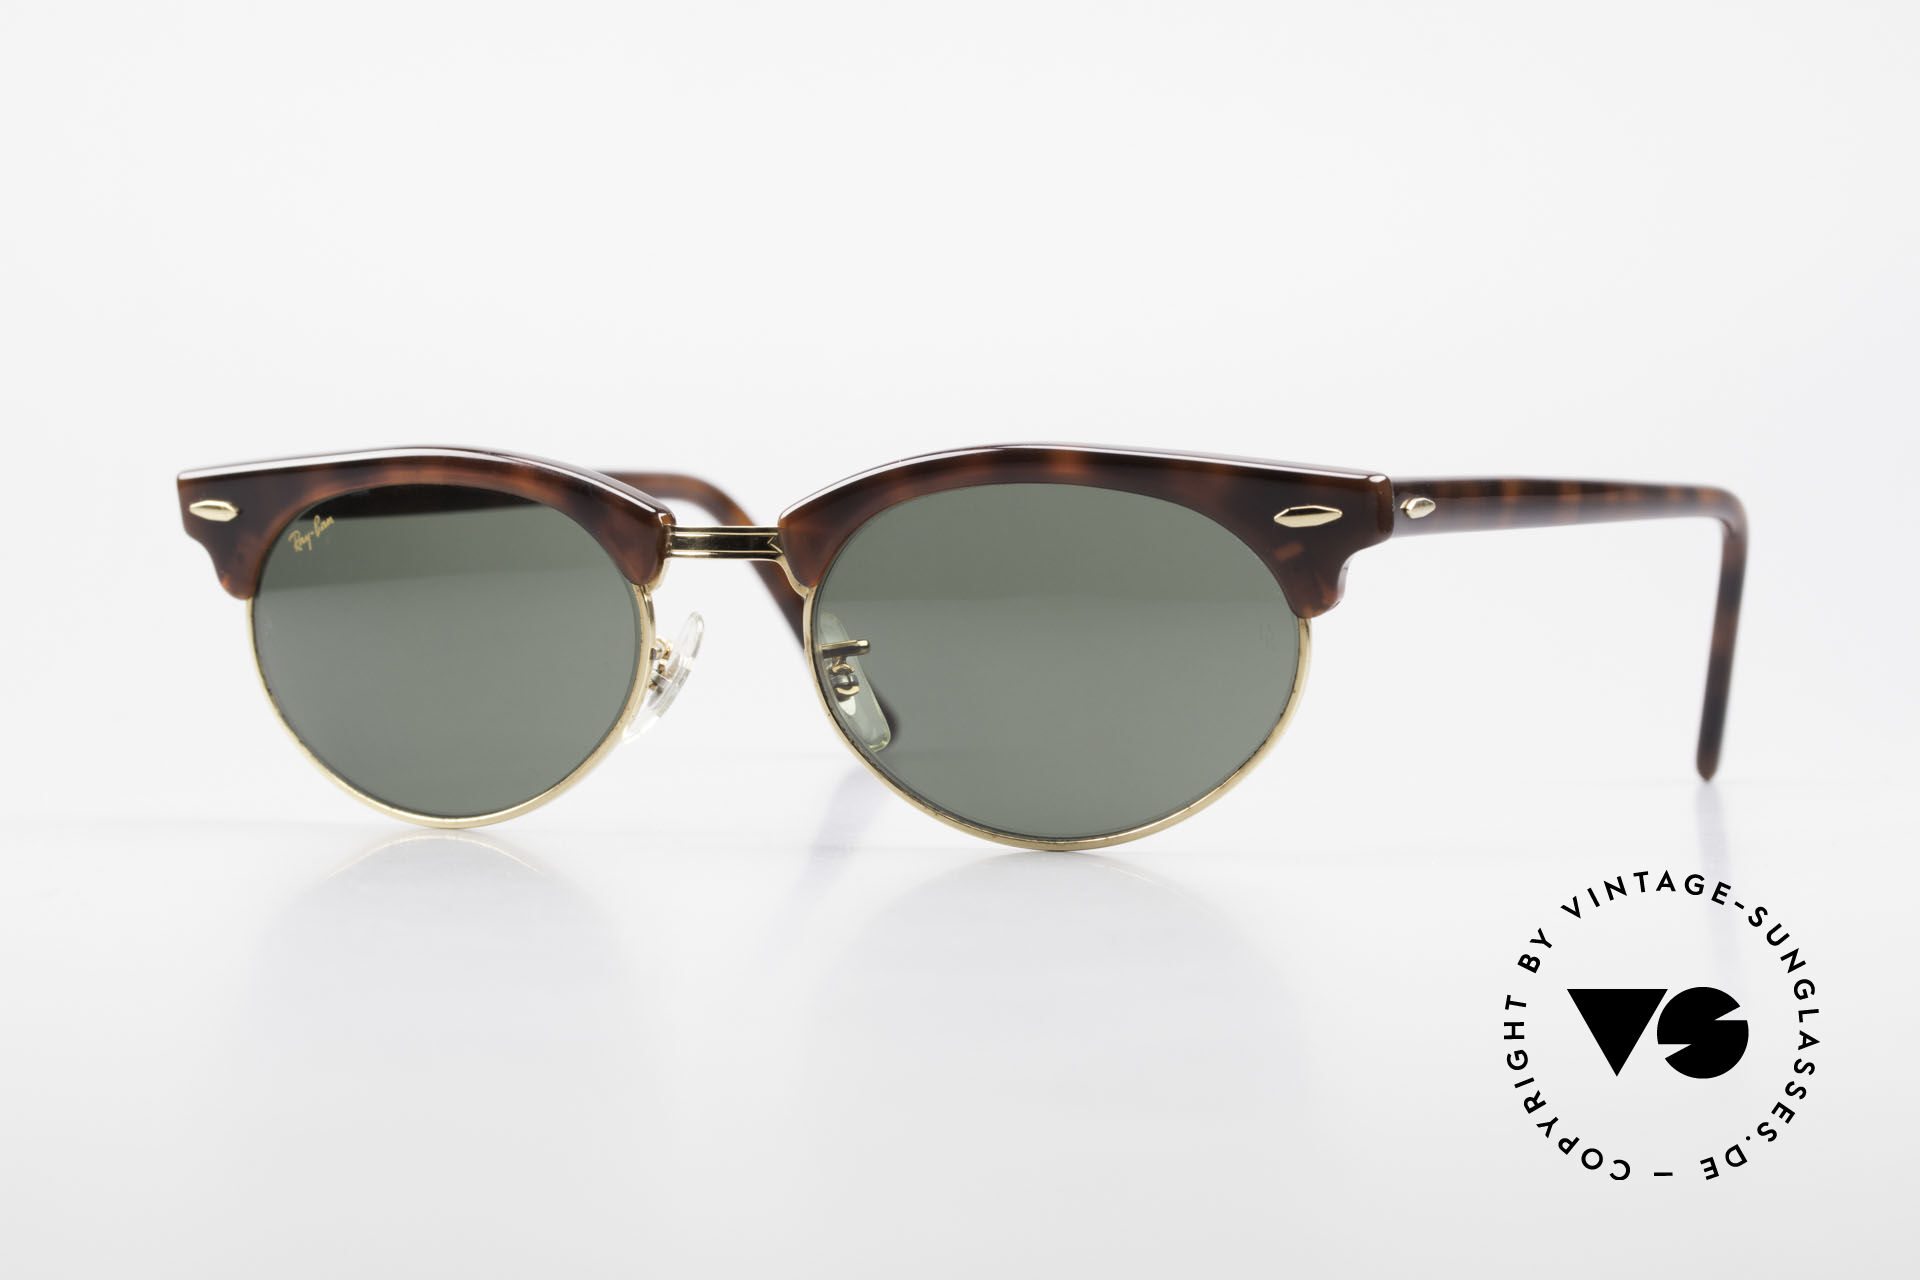 Sunglasses Ray Ban Clubmaster Oval 80's Bausch u0026 Lomb Original